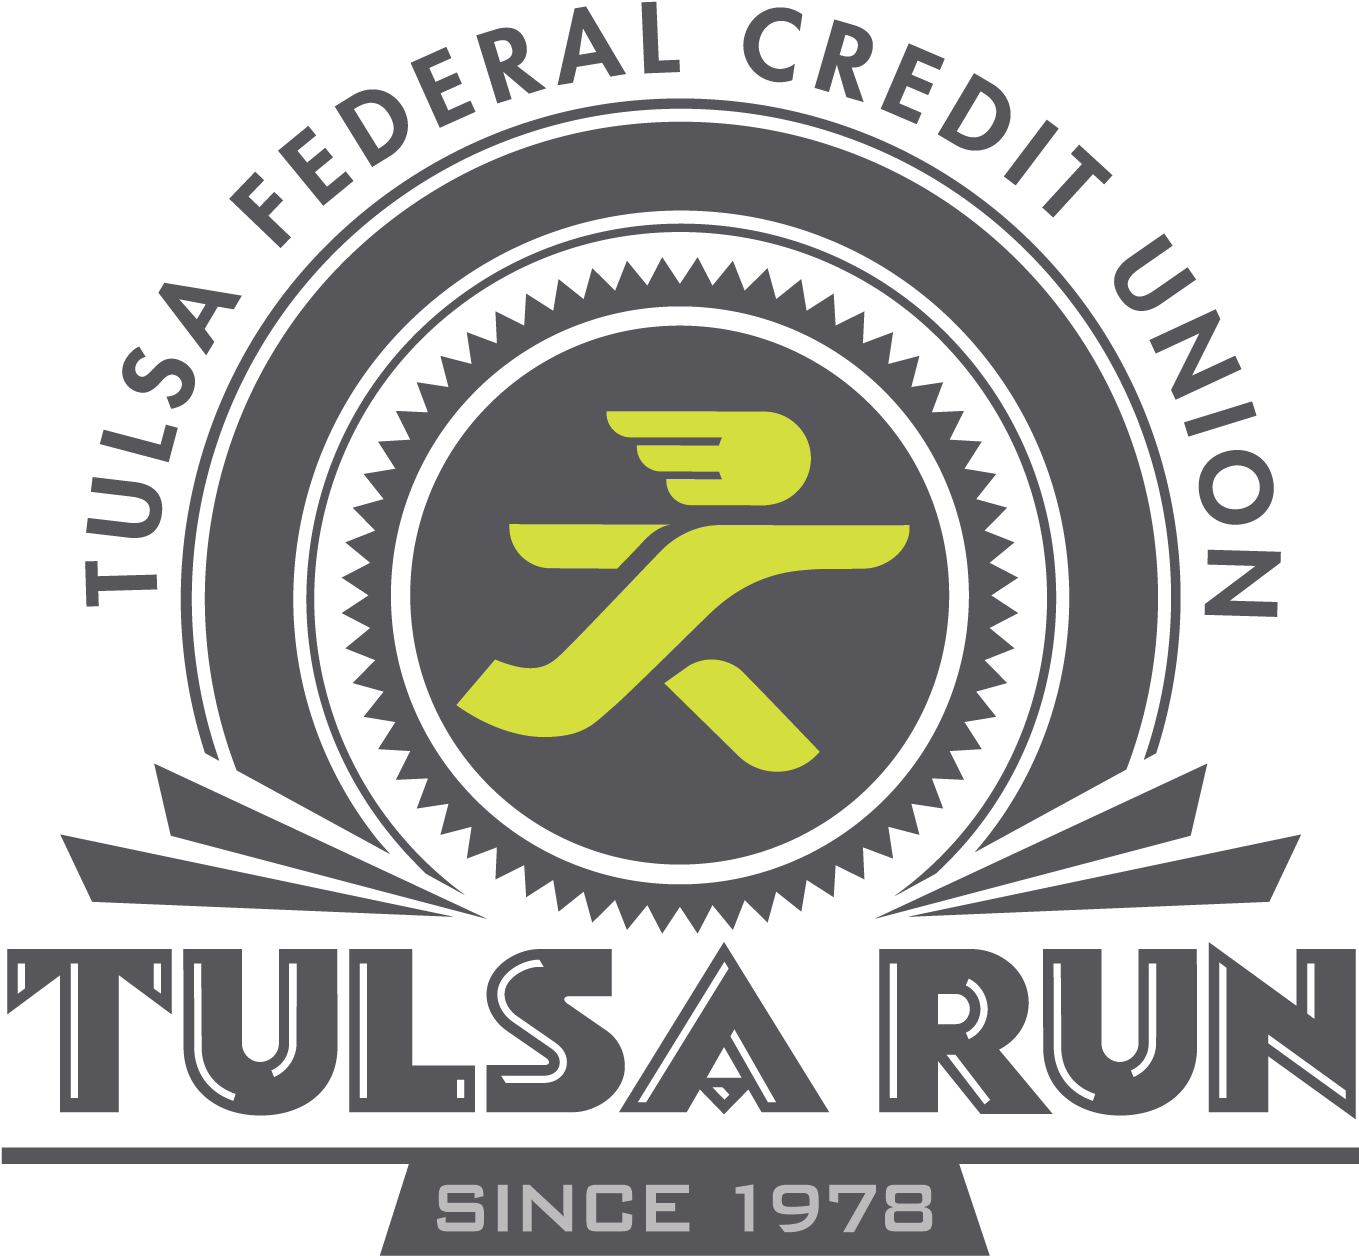 Tulsa Federal Credit Union Tulsa Run Crest Logo - Tulsa Federal Credit Union Tulsa Run 2018 (1641x1587)